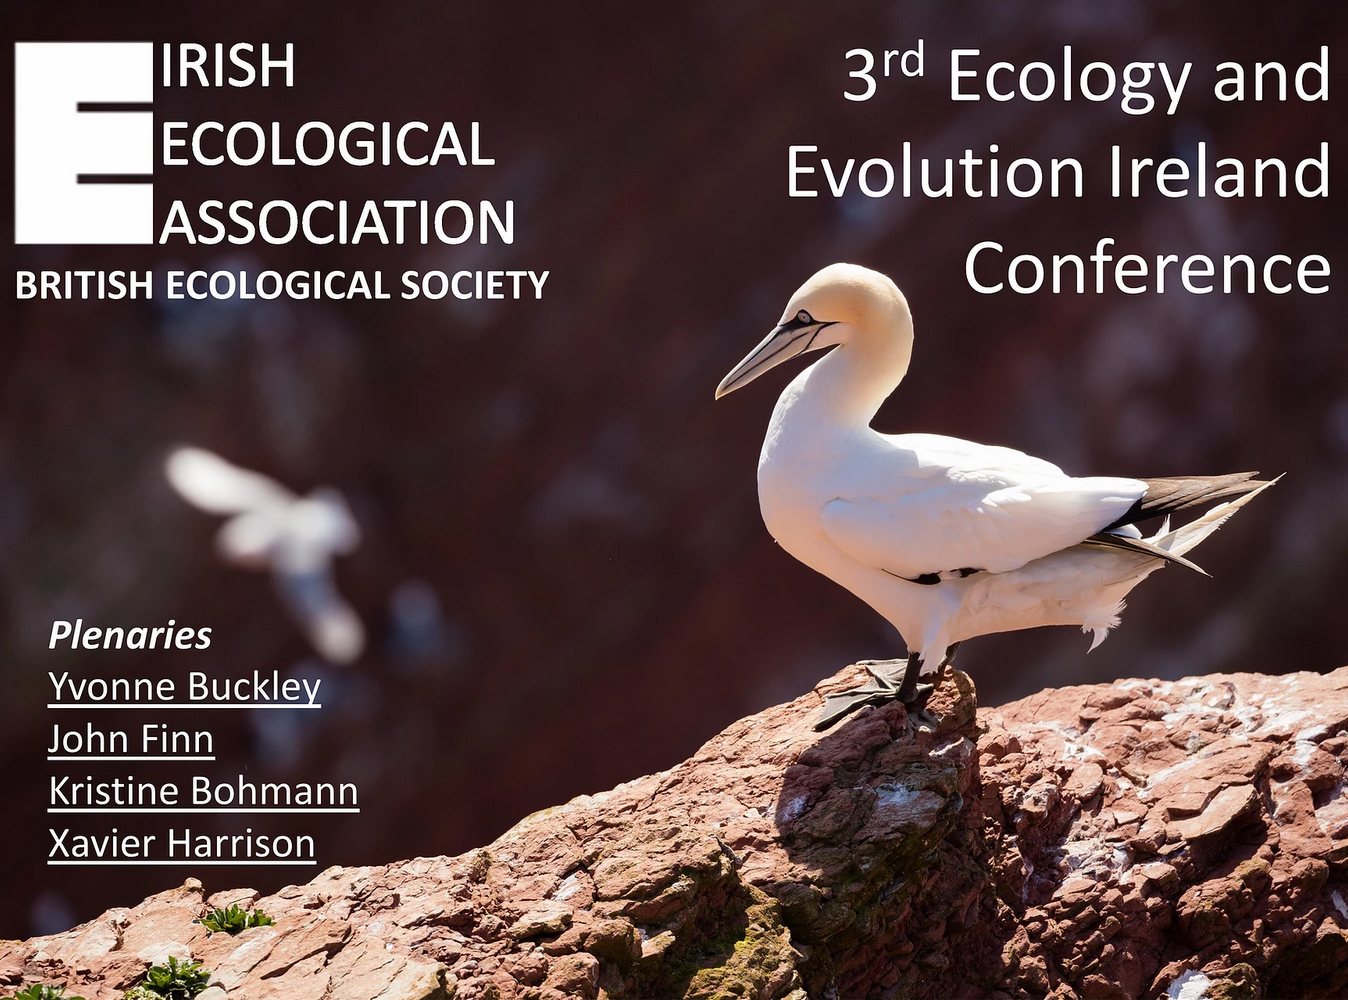 Irish Ecological Association - Third Ecology and Evolution Ireland Conference